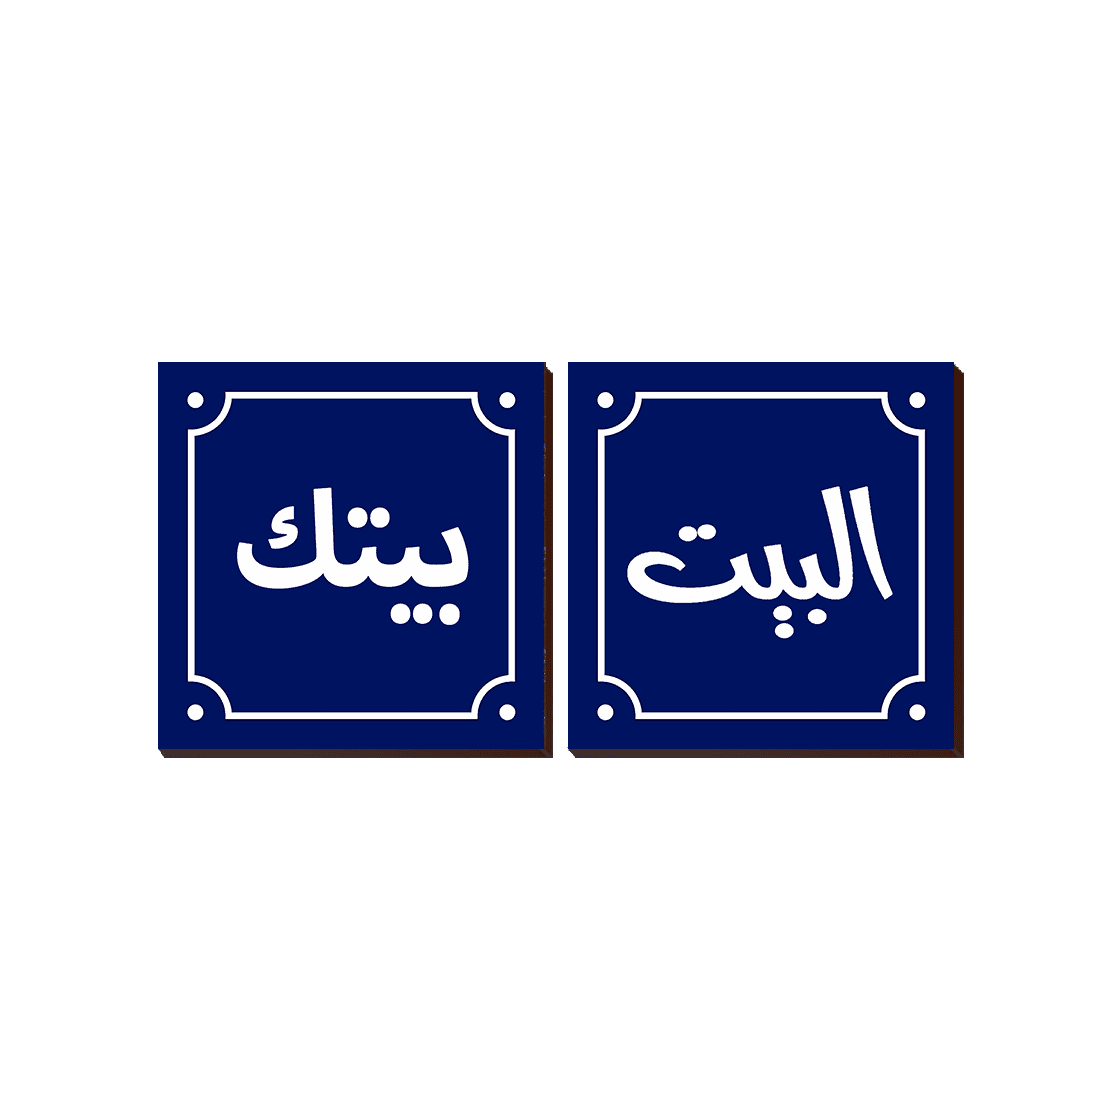 Maqolat Arabic Quotation 2 Piece Set Square 103